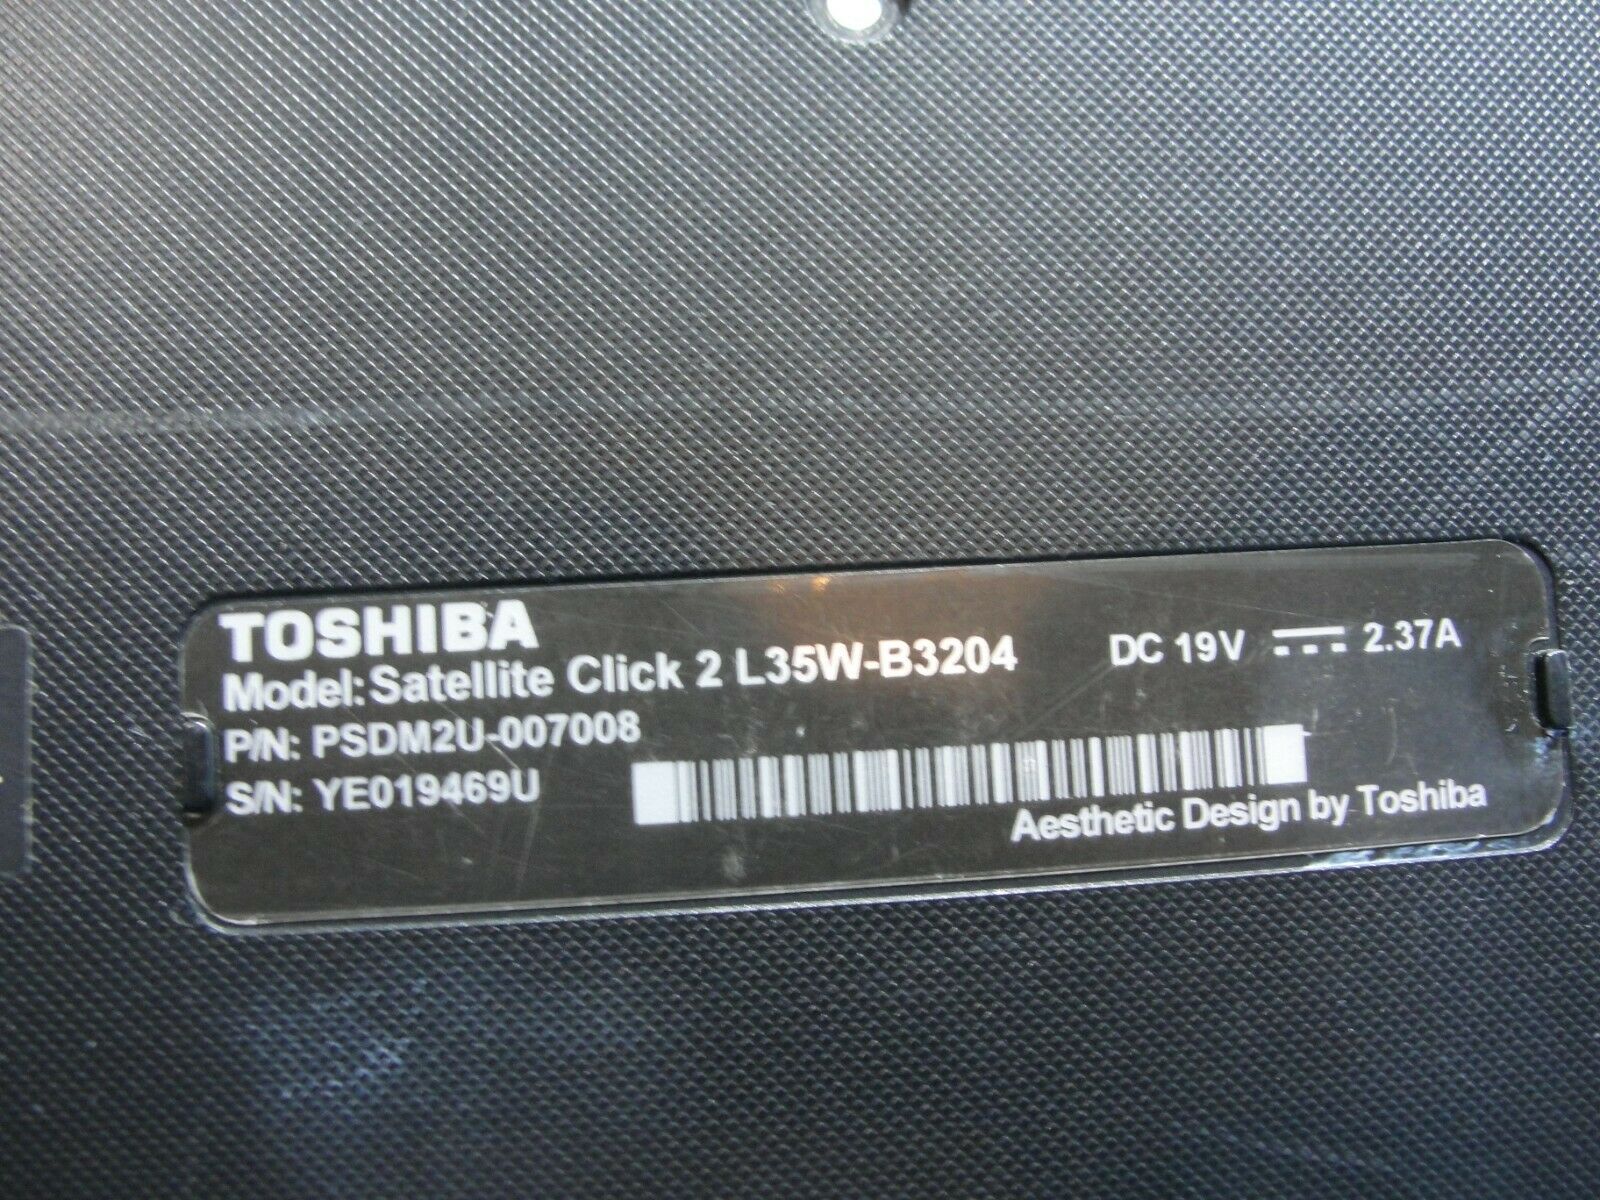 Toshiba Satellite Click 2 L35W-B3204 13.3